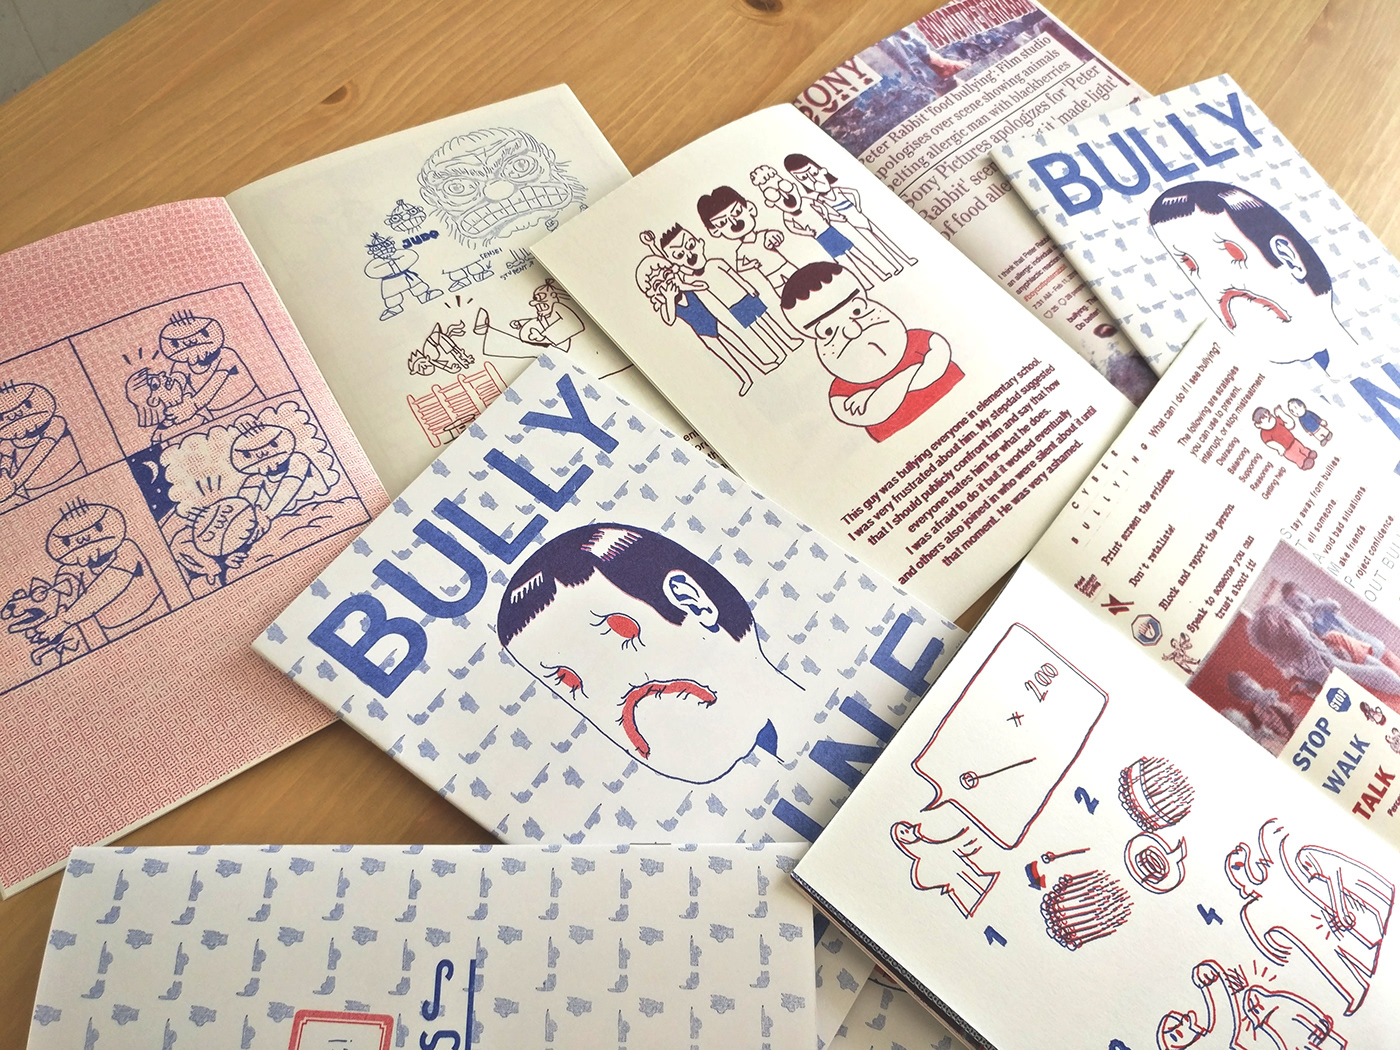 Risoprint risograph fanzine school bully Bullying nemmivoltunk fillér máté Riso publishing  